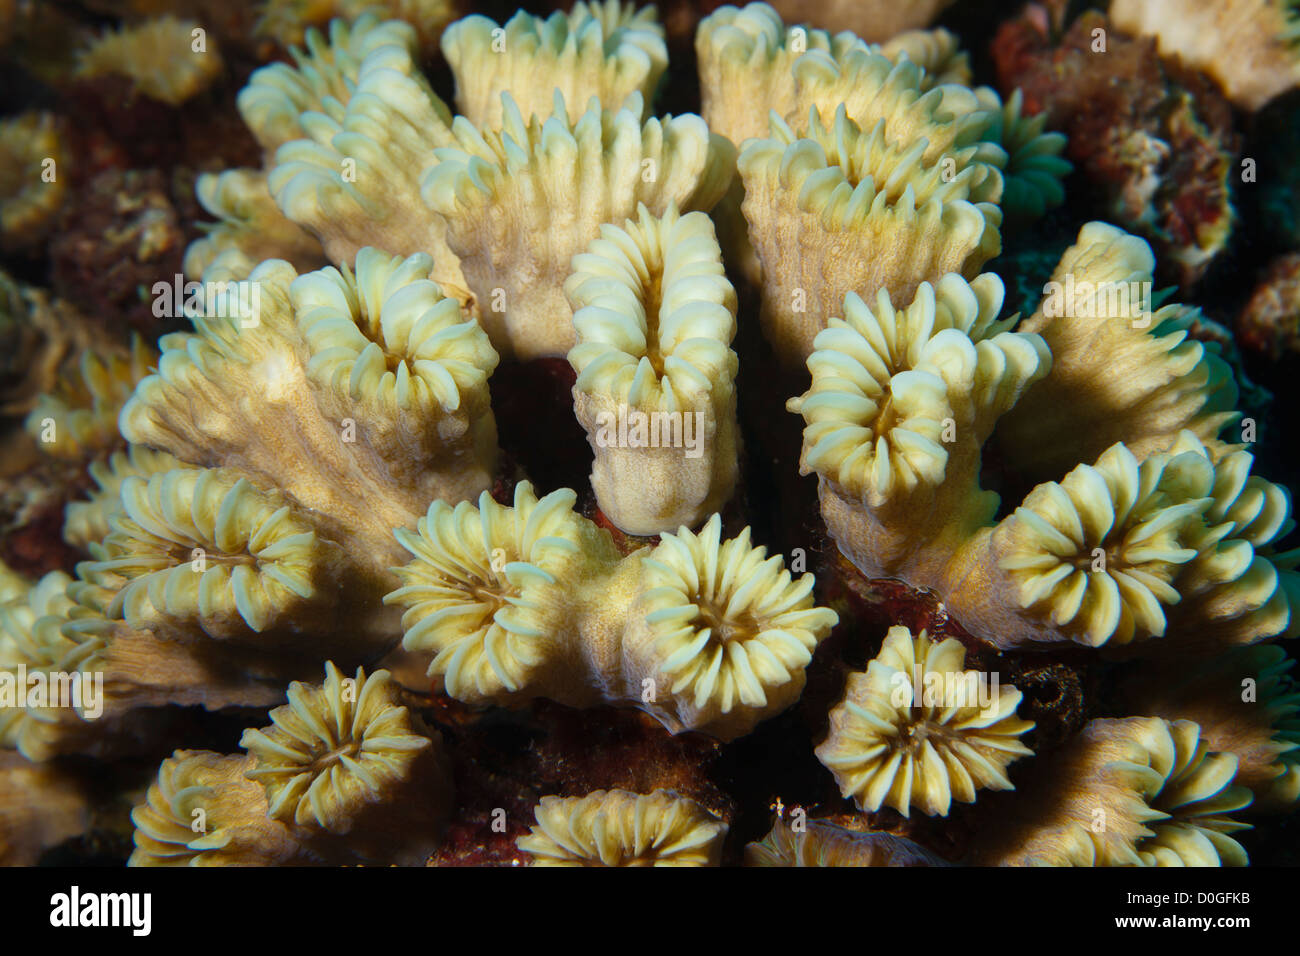 Corallo liscio fiore (eusmilia fartigiata) nel Mar dei Caraibi intorno a Bonaire, Antille olandesi. Foto V.D. Foto Stock